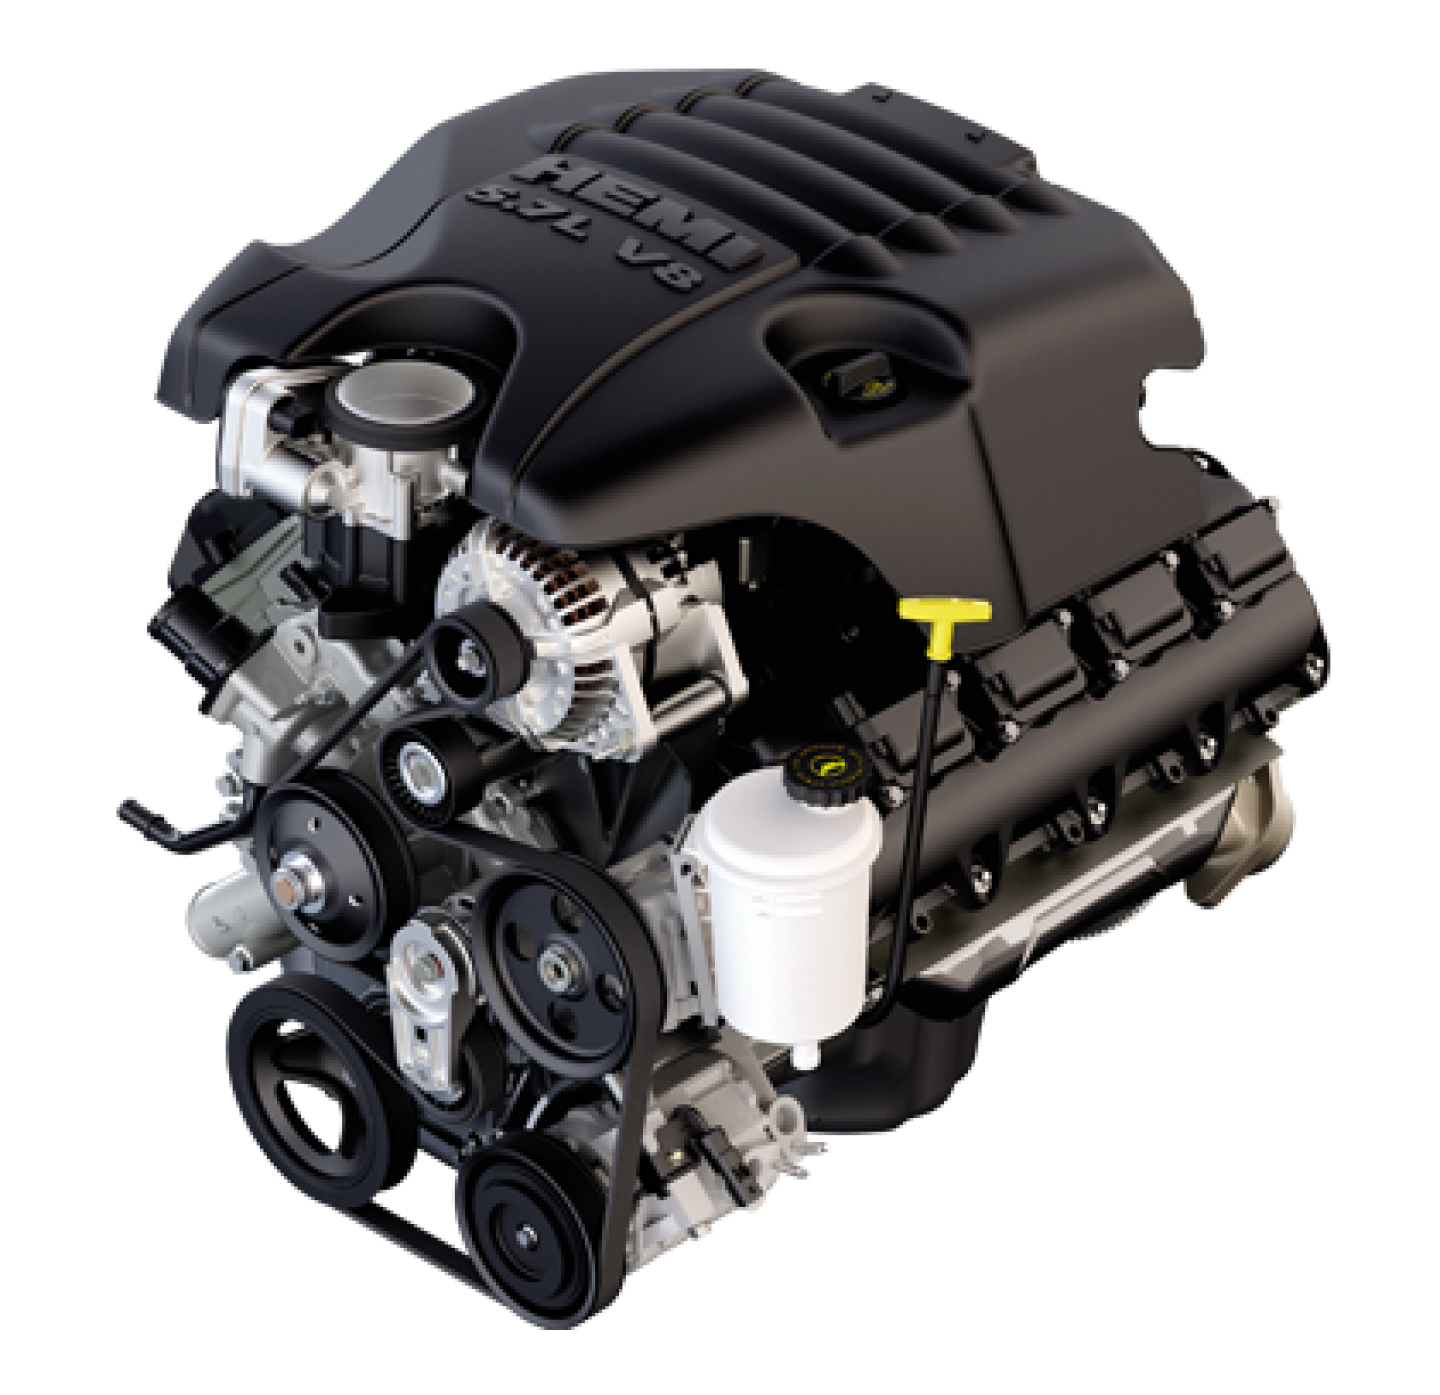 Атс двигатель. Мотор Hemi v8. Двигатель dodge Ram 5.7 Hemi. Hemi 5.7 v8. Двигатель Chrysler Hemi v8 5,7.